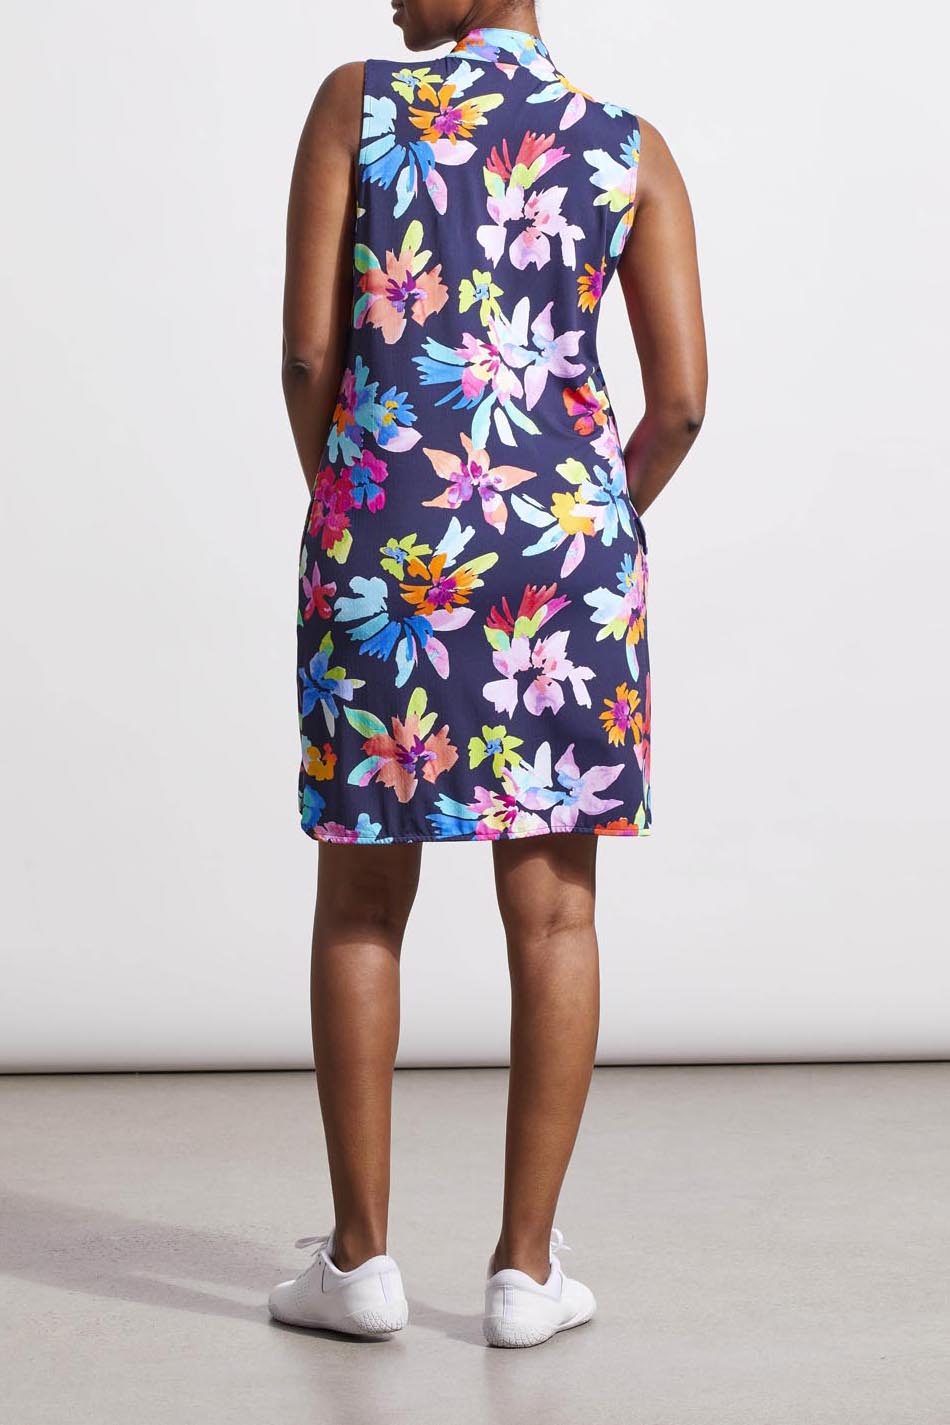 Ladies Shell Caye 1/4 Zip Dress - Abalone - L - Mojo Sportswear Company